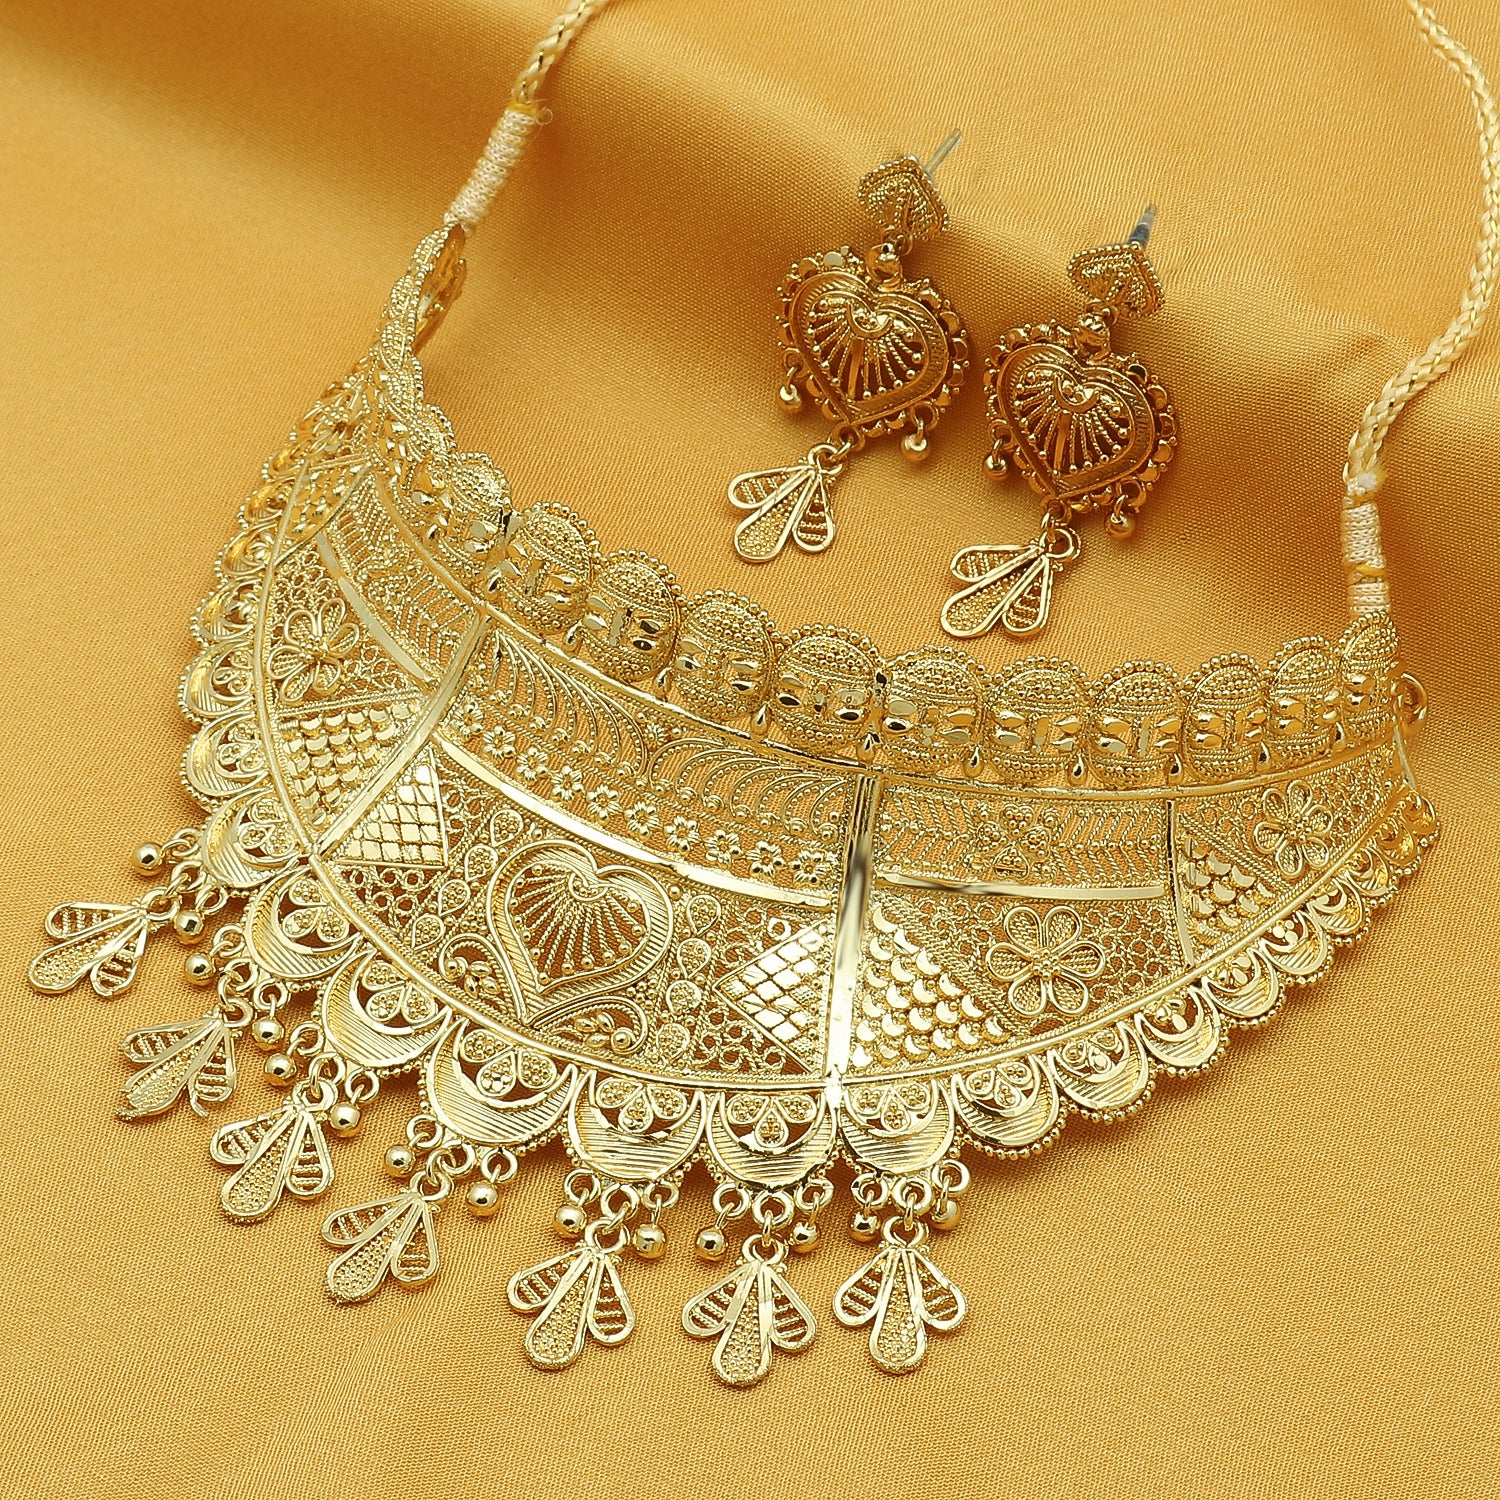 24k gold necklace with teddy bear charm – BH jewelry